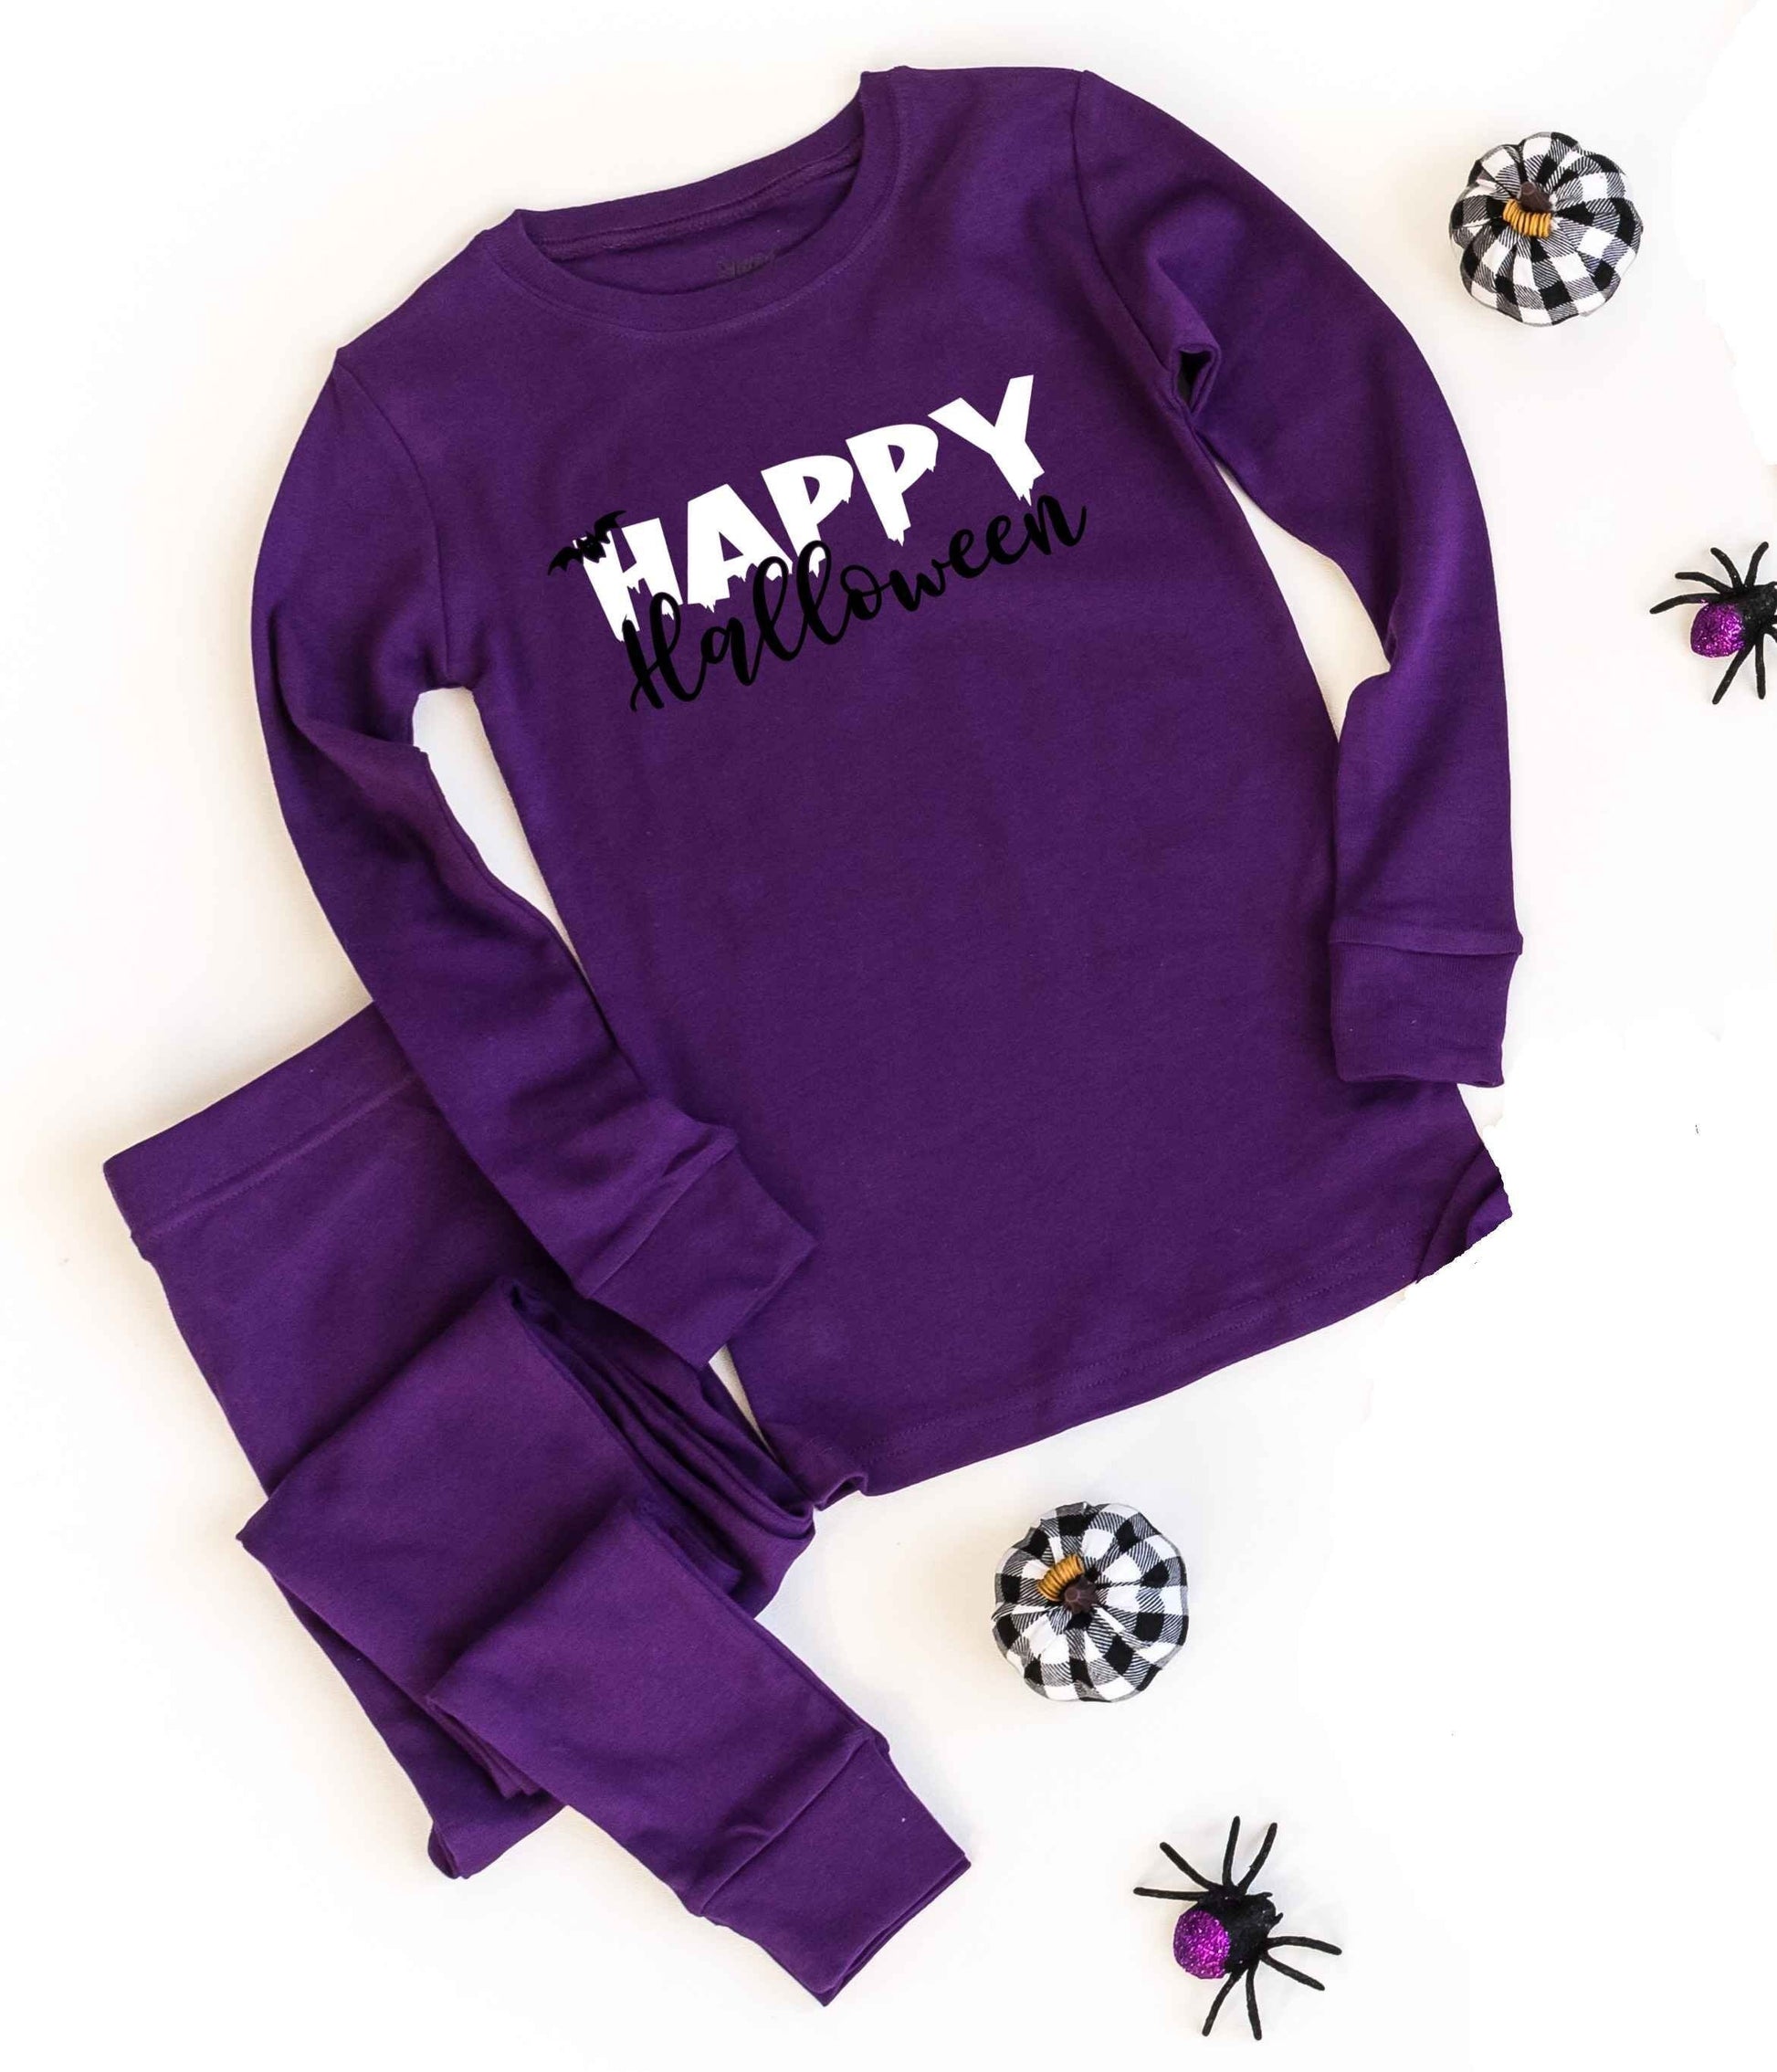 Happy Halloween v2 Solid Purple Pajamas - Halloween Pajama Sets - Kids and Adult Sizes